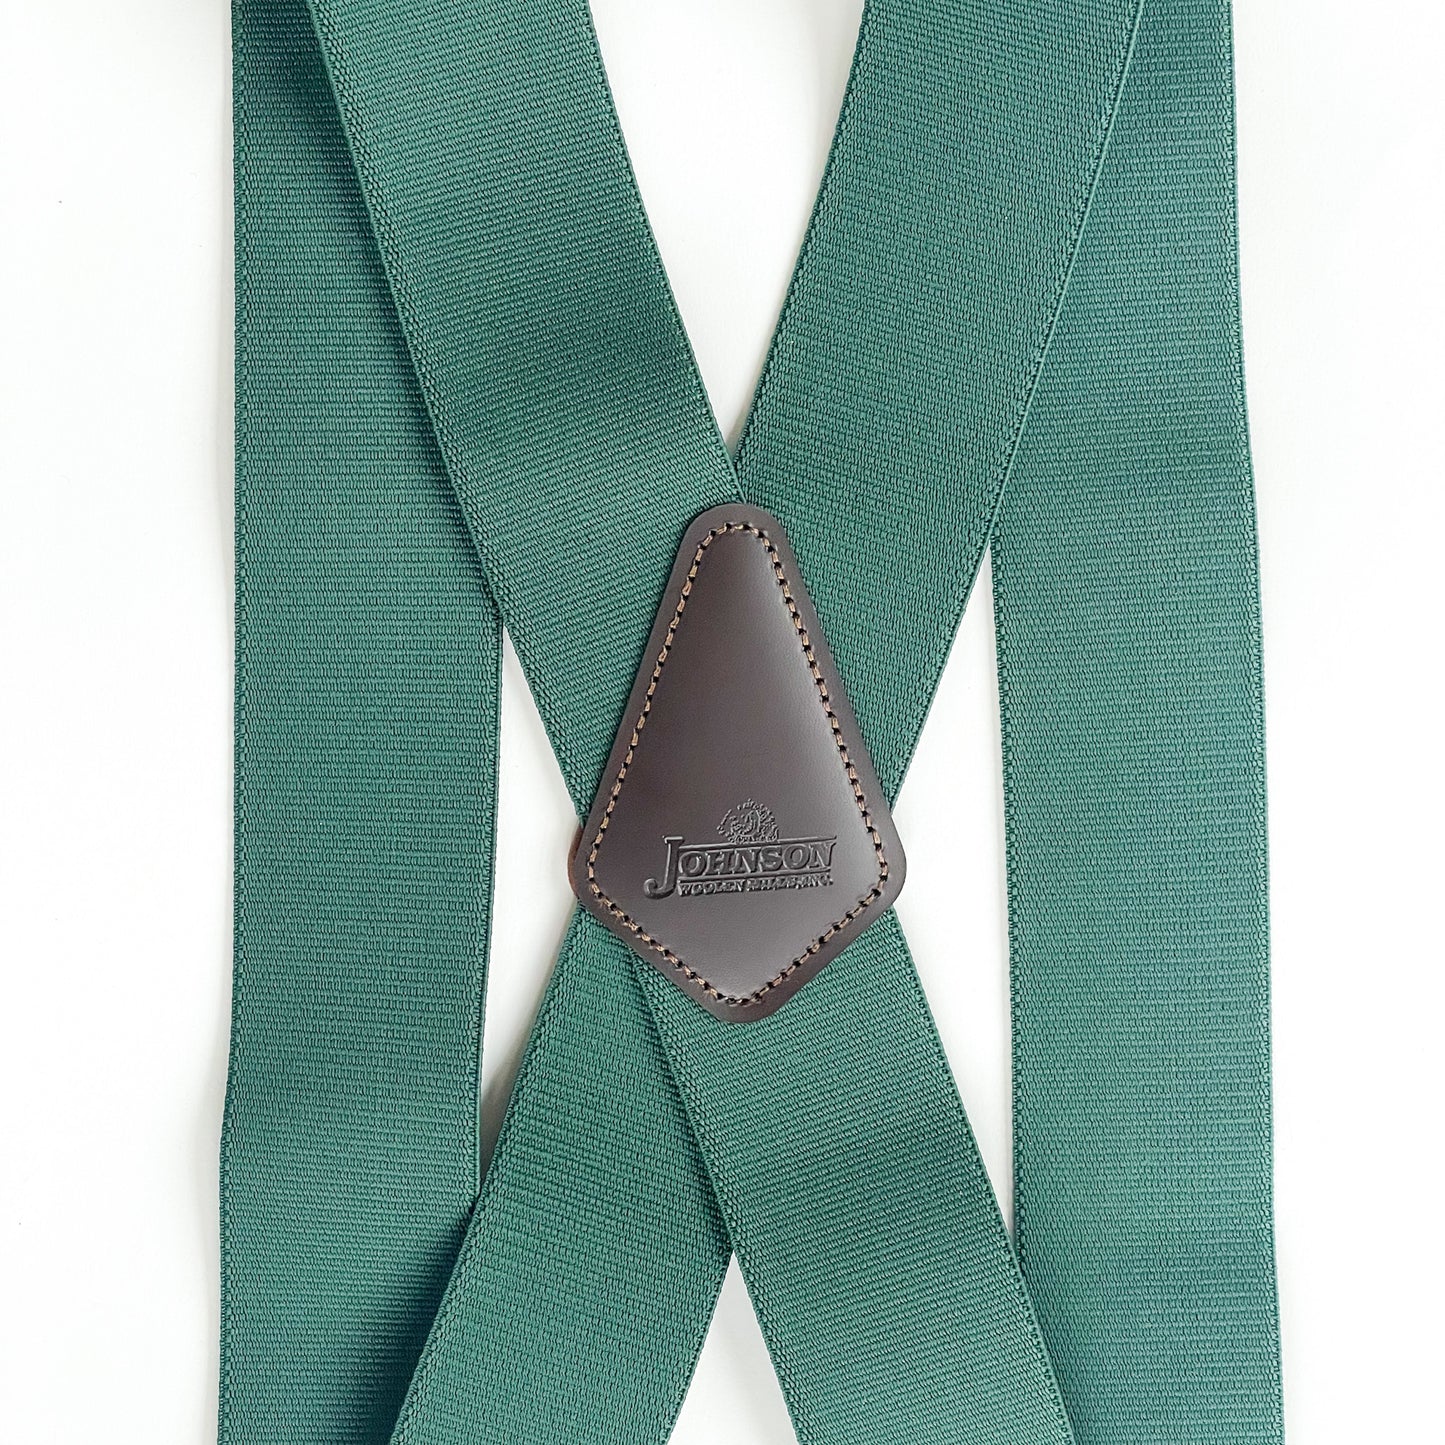 Johnson Woolen Mills green button suspenders back side